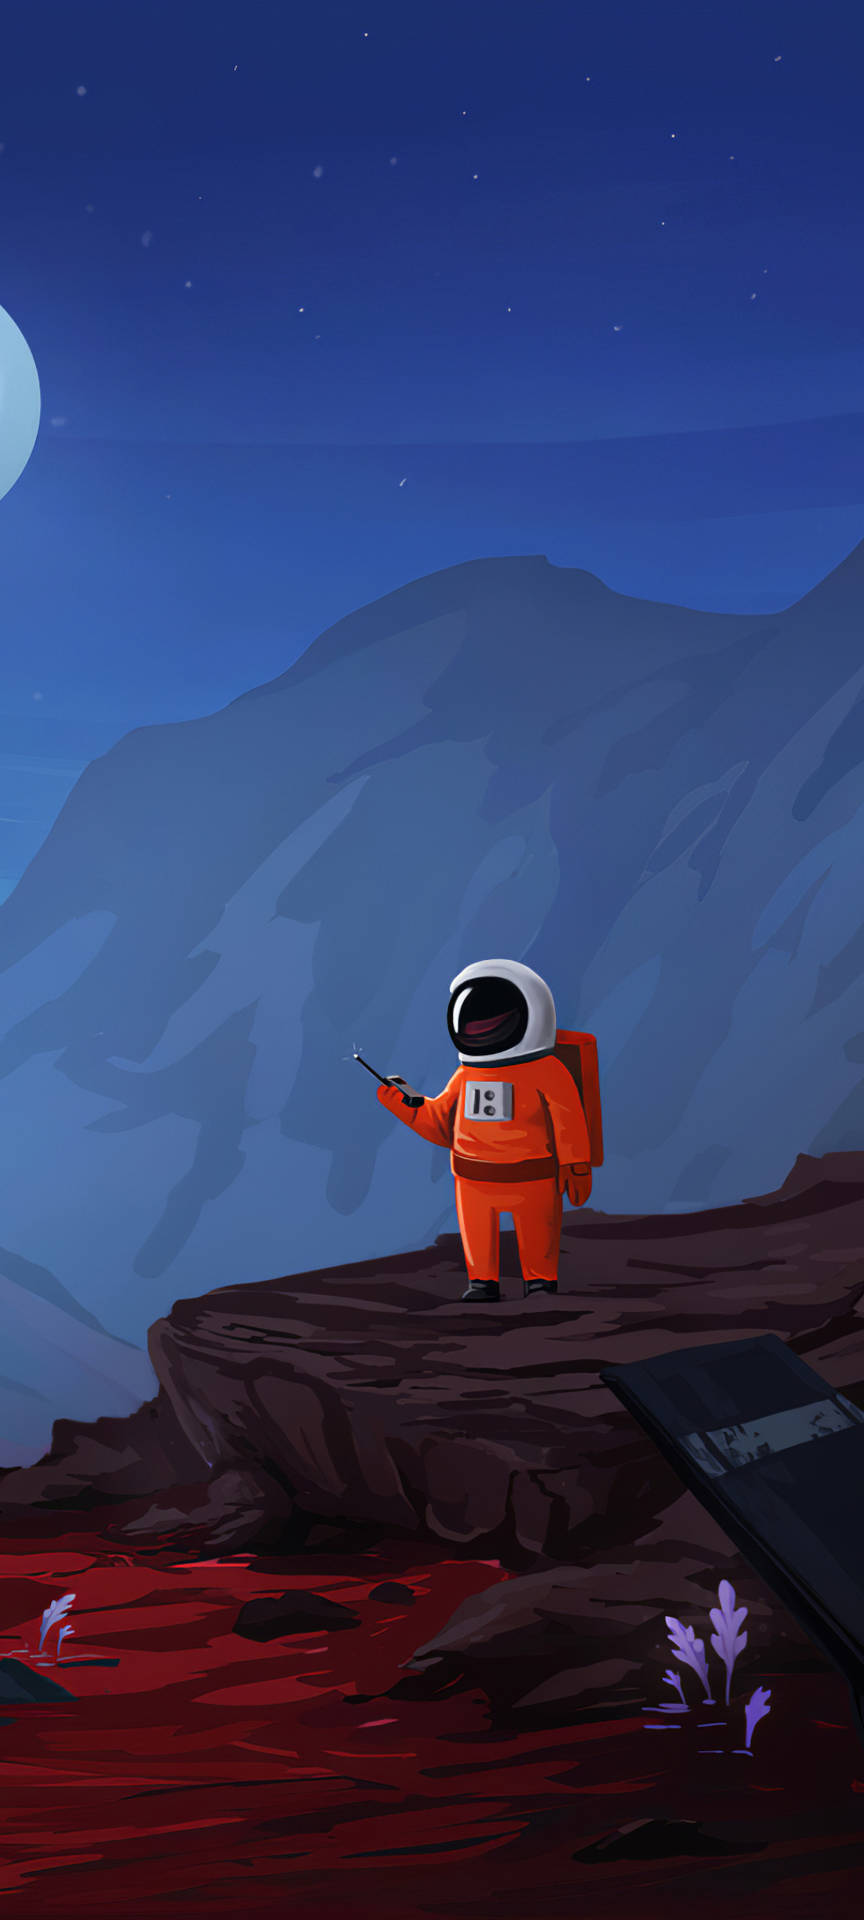 Cartoon Astronaut With Walkie-talkie